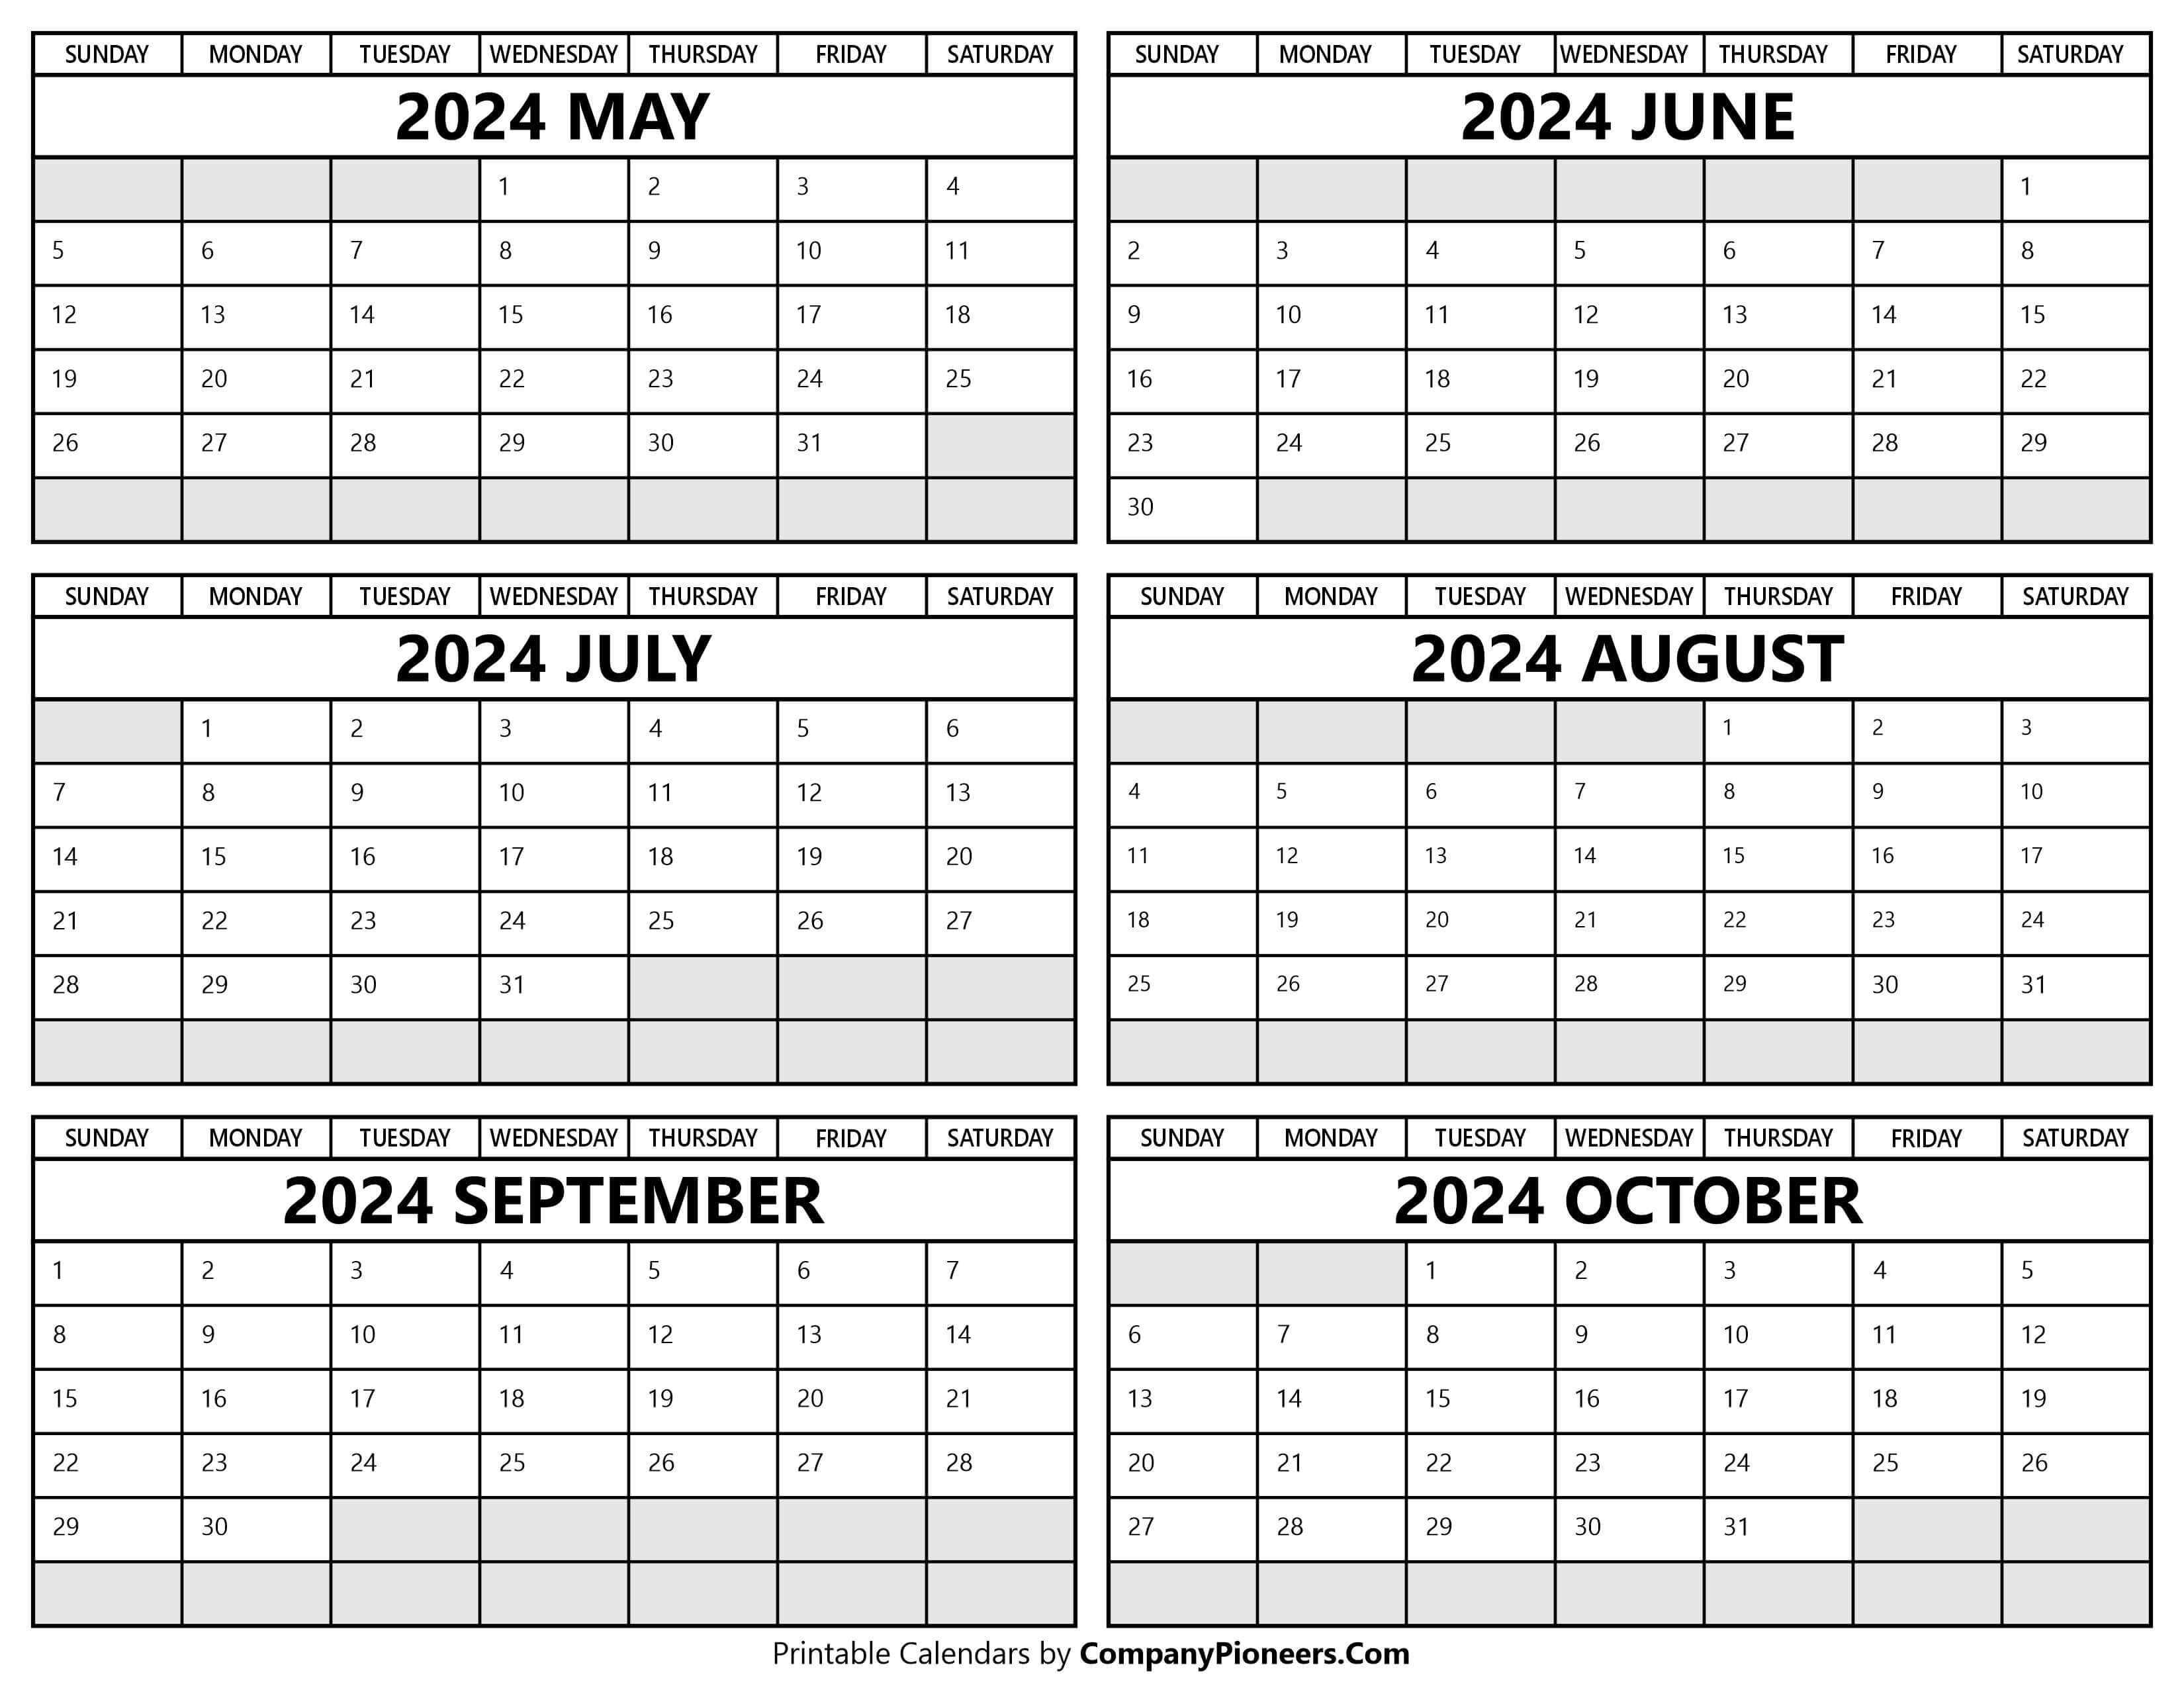 Printable 2024 May to October Calendar